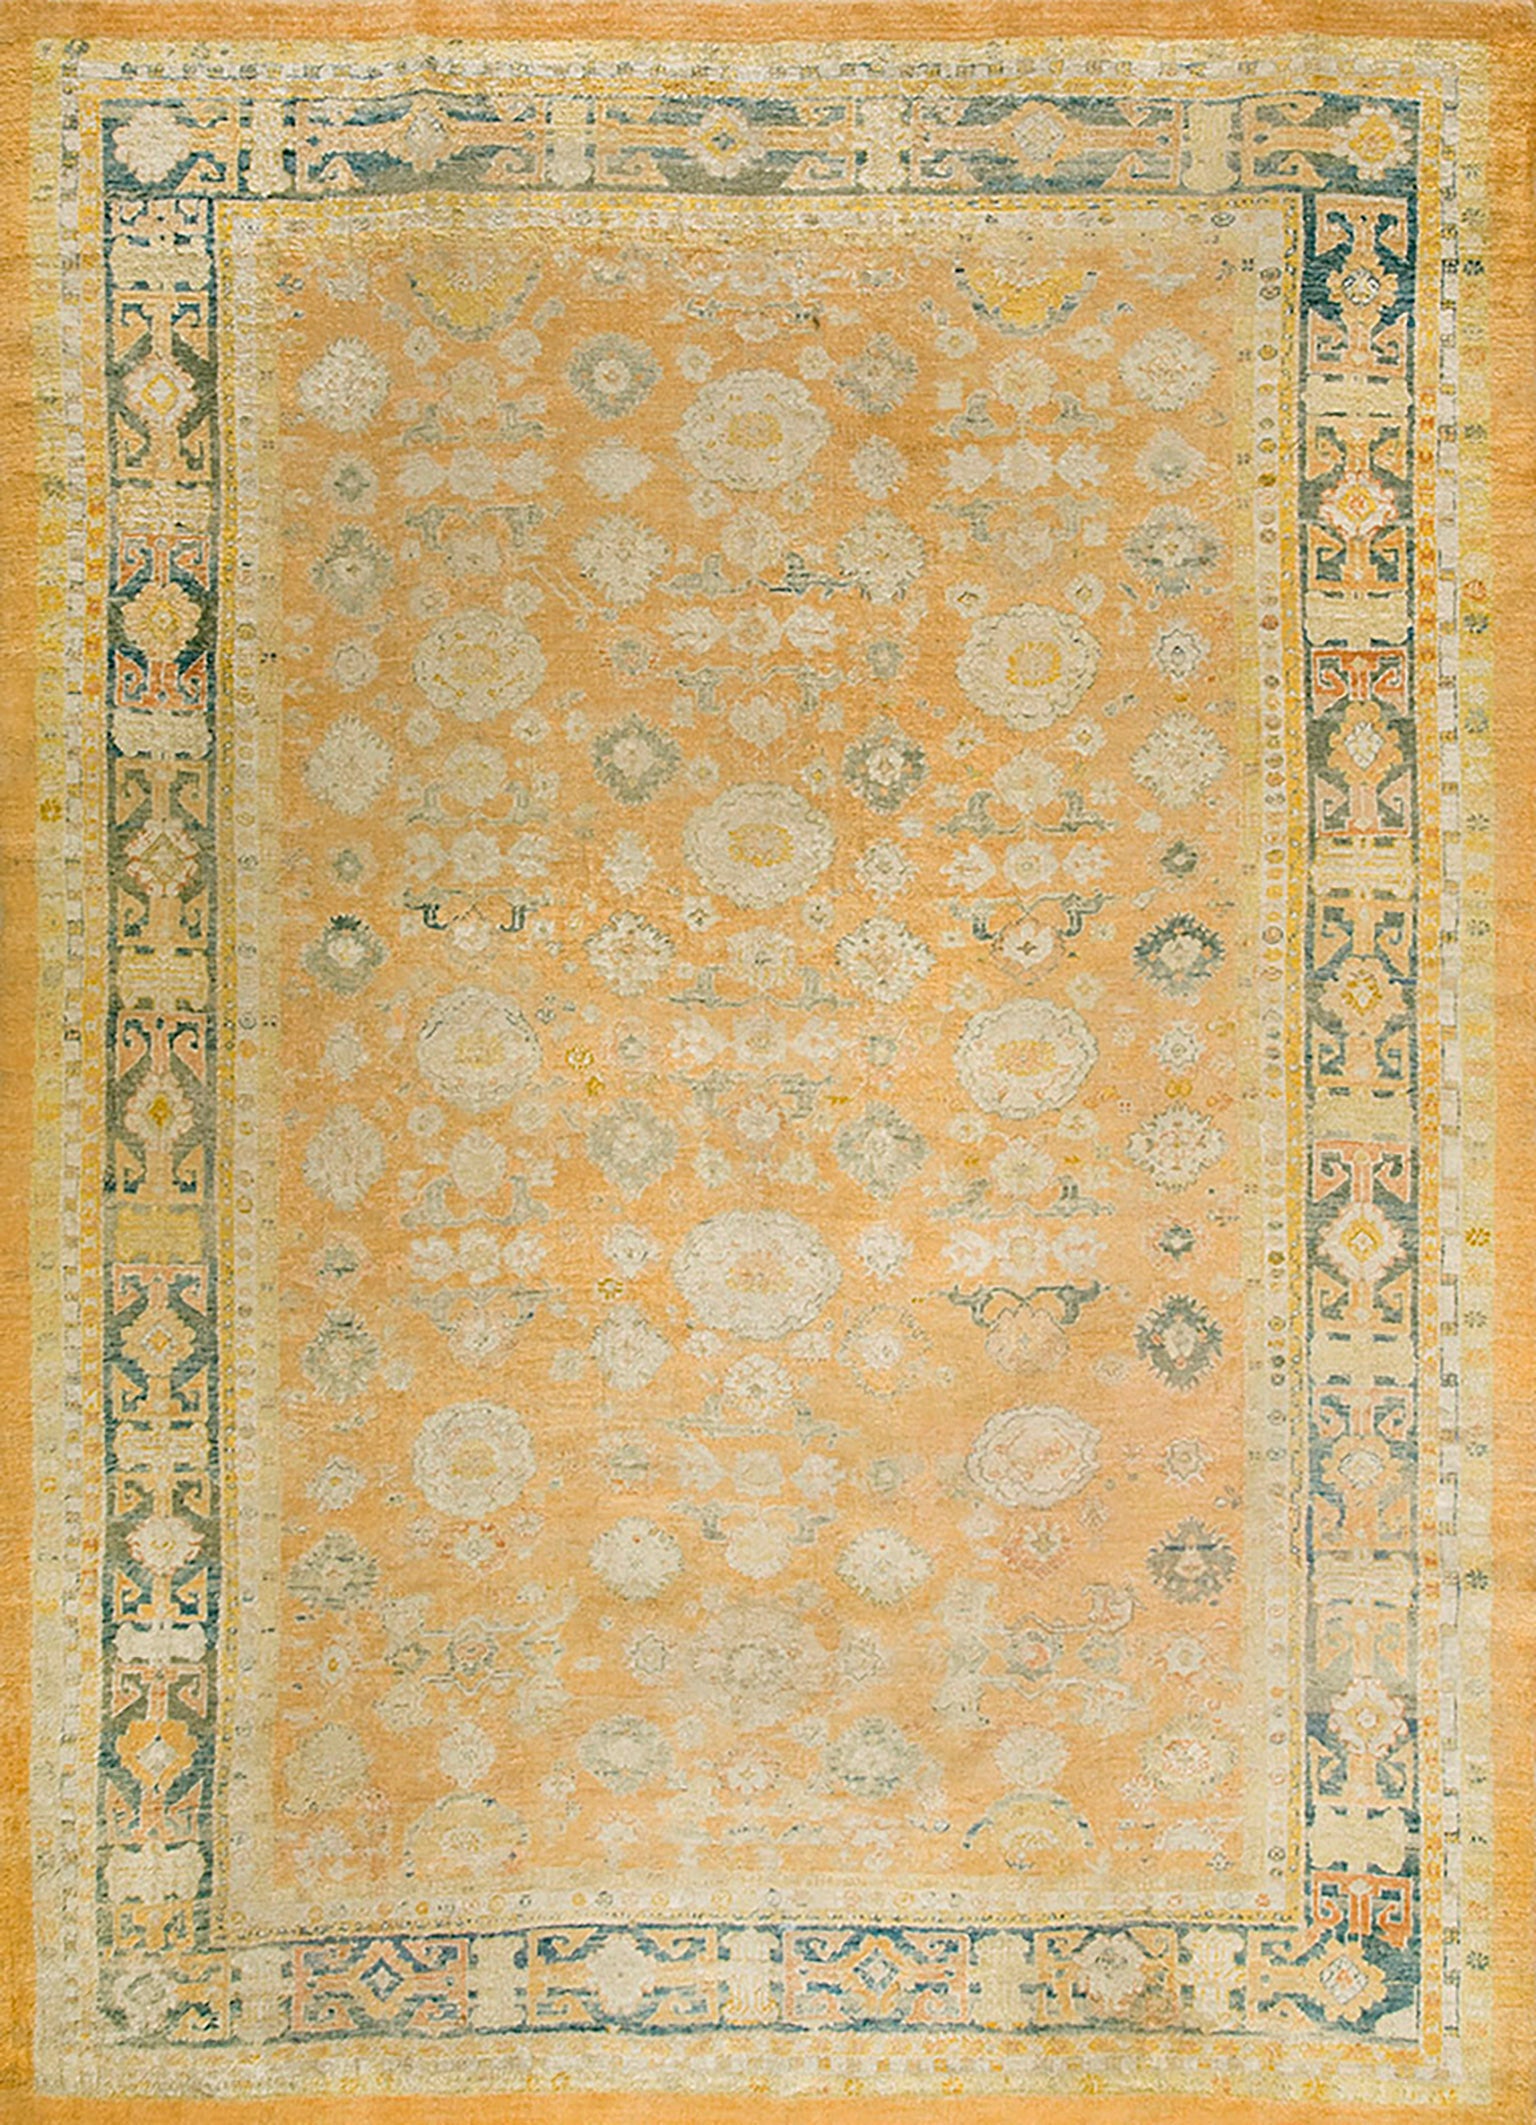 19th Century Turkish Angora Oushak Carpet ( 9'9" x 13'3" - 297 x 403 ) For Sale